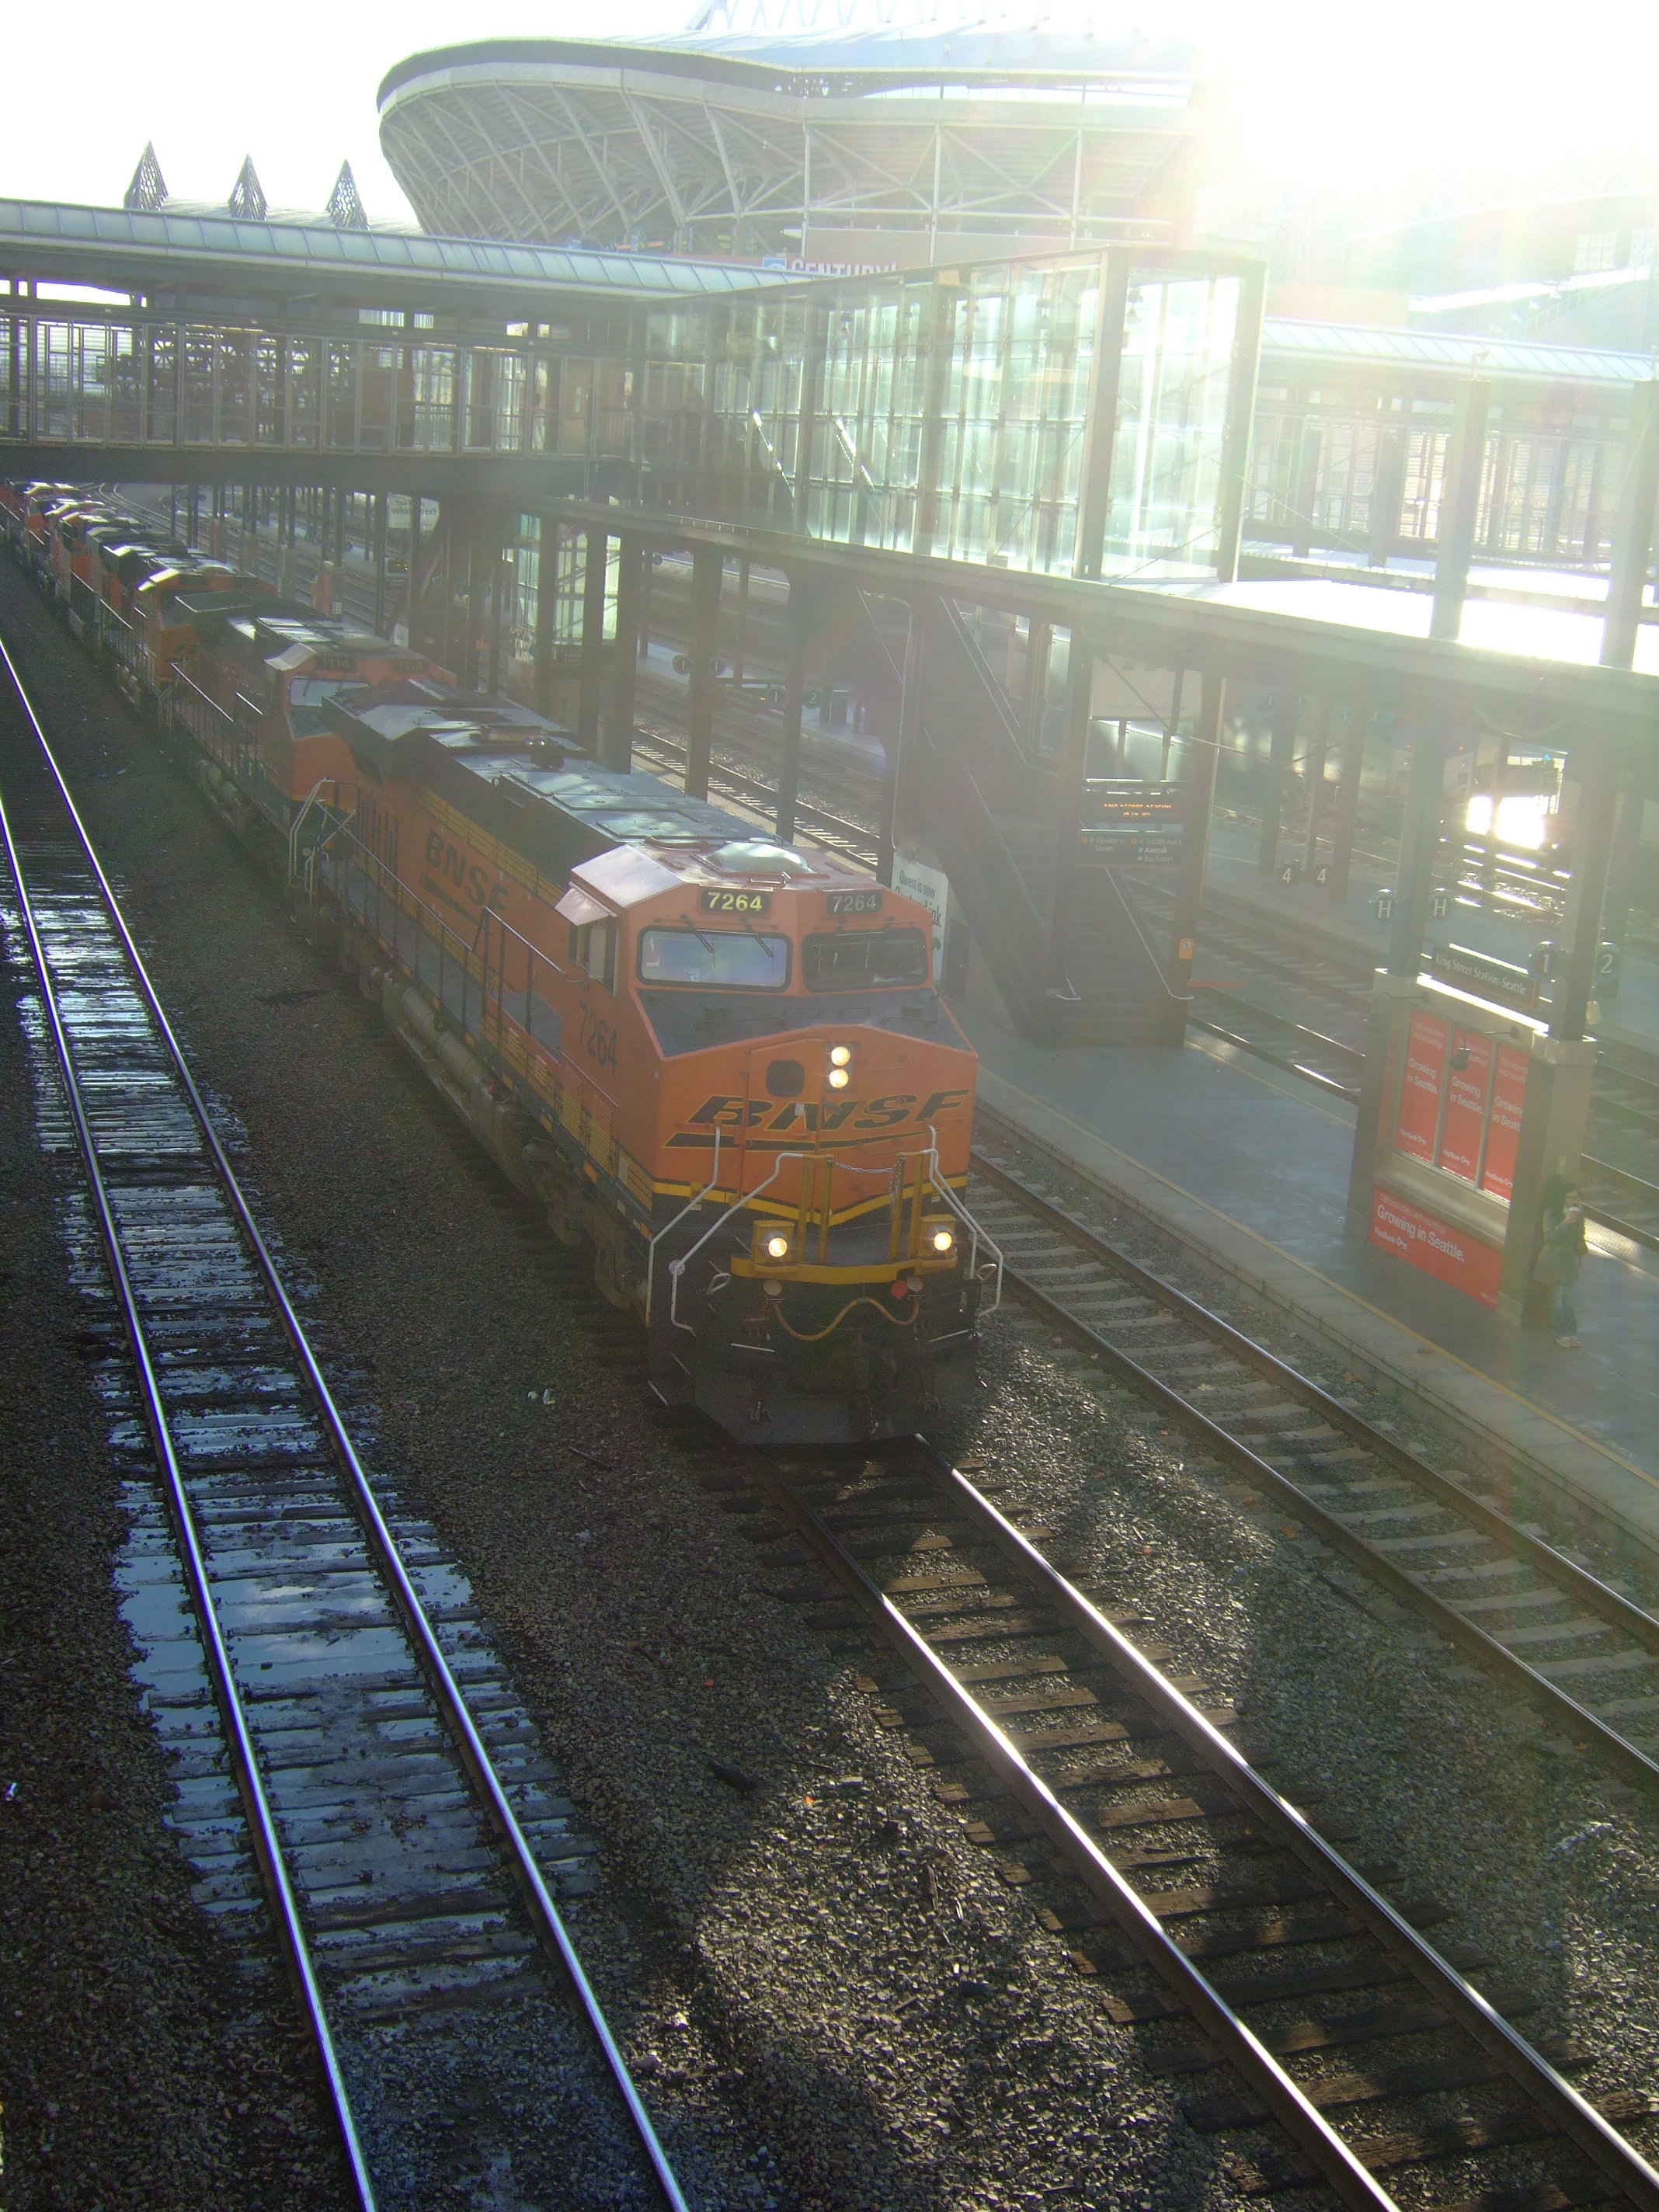 Trains passing